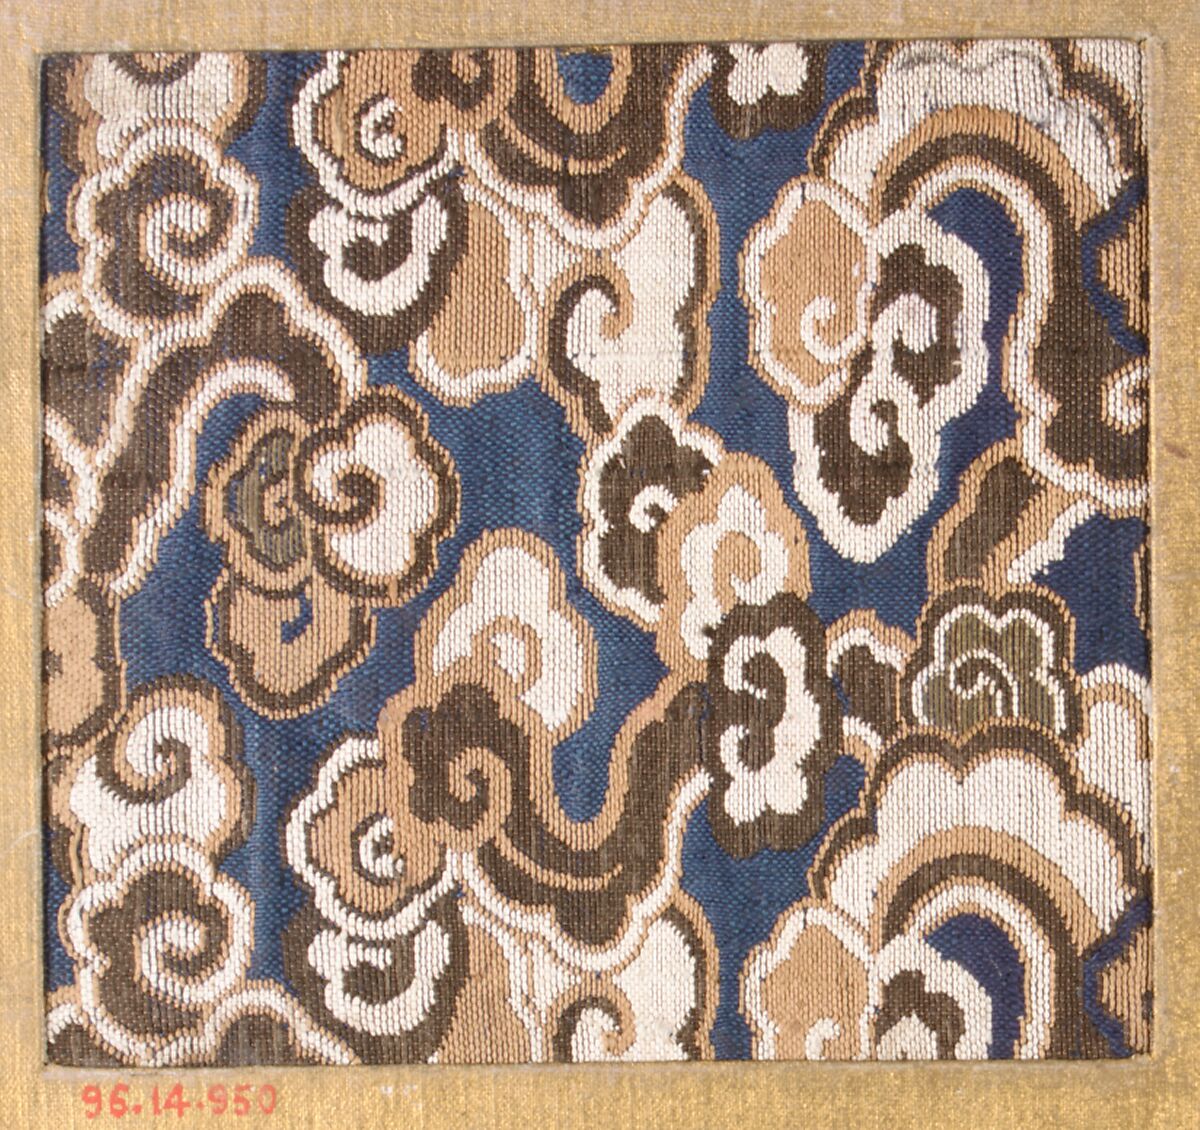 Piece, Silk, Japan 